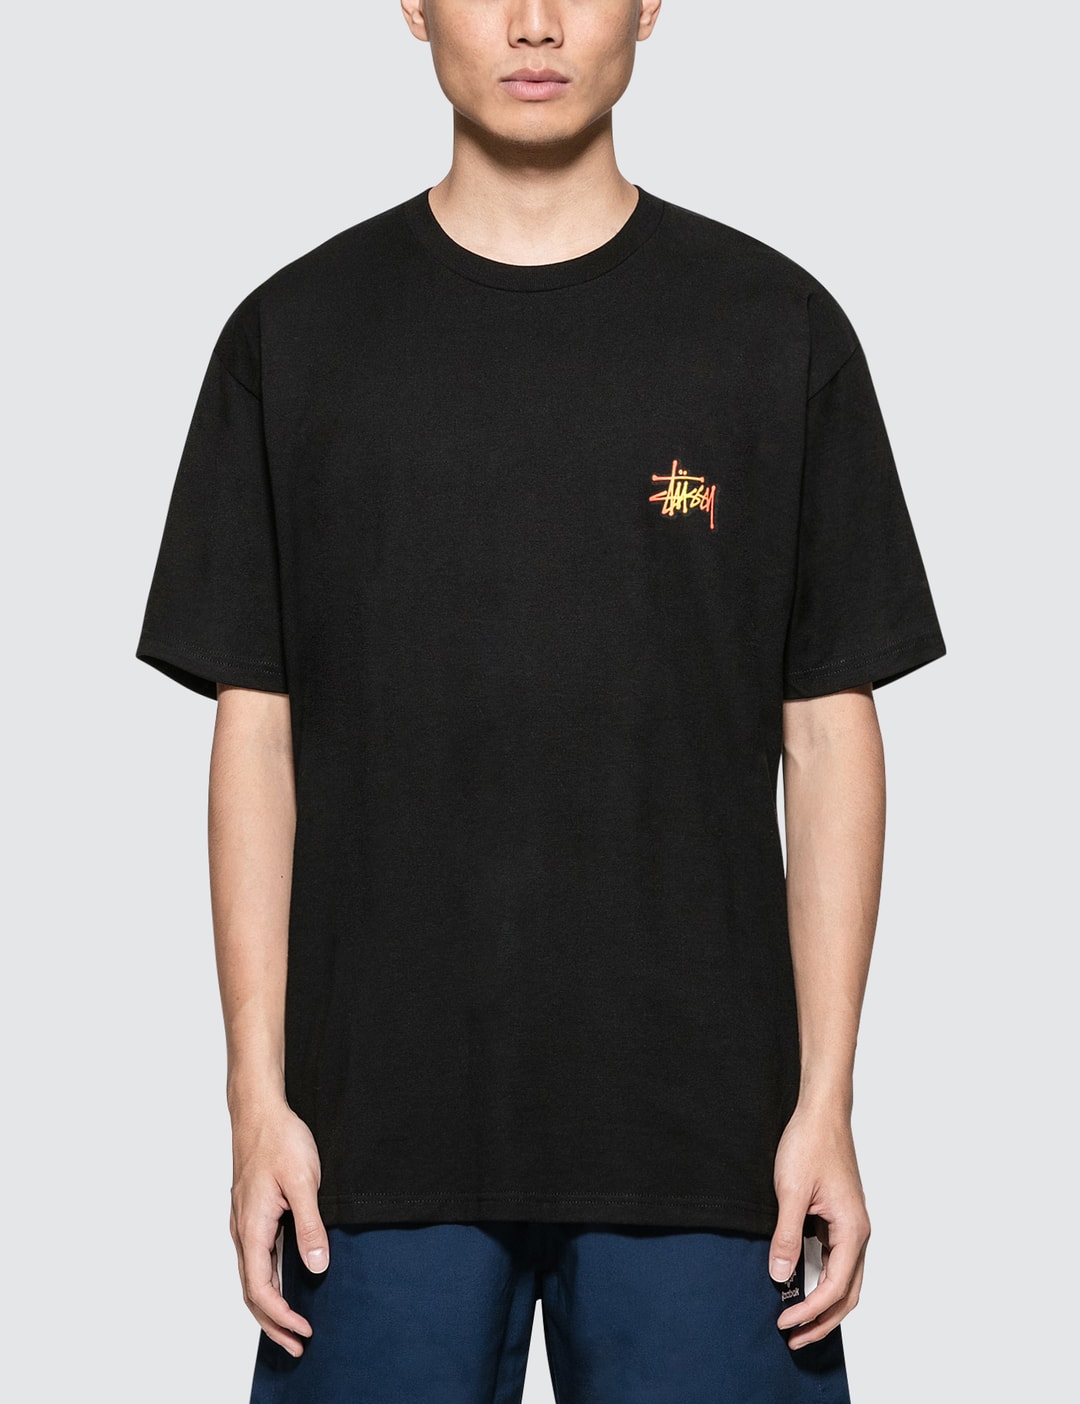 Stüssy - Fireball T-Shirt | HBX - Globally Curated Fashion and ...